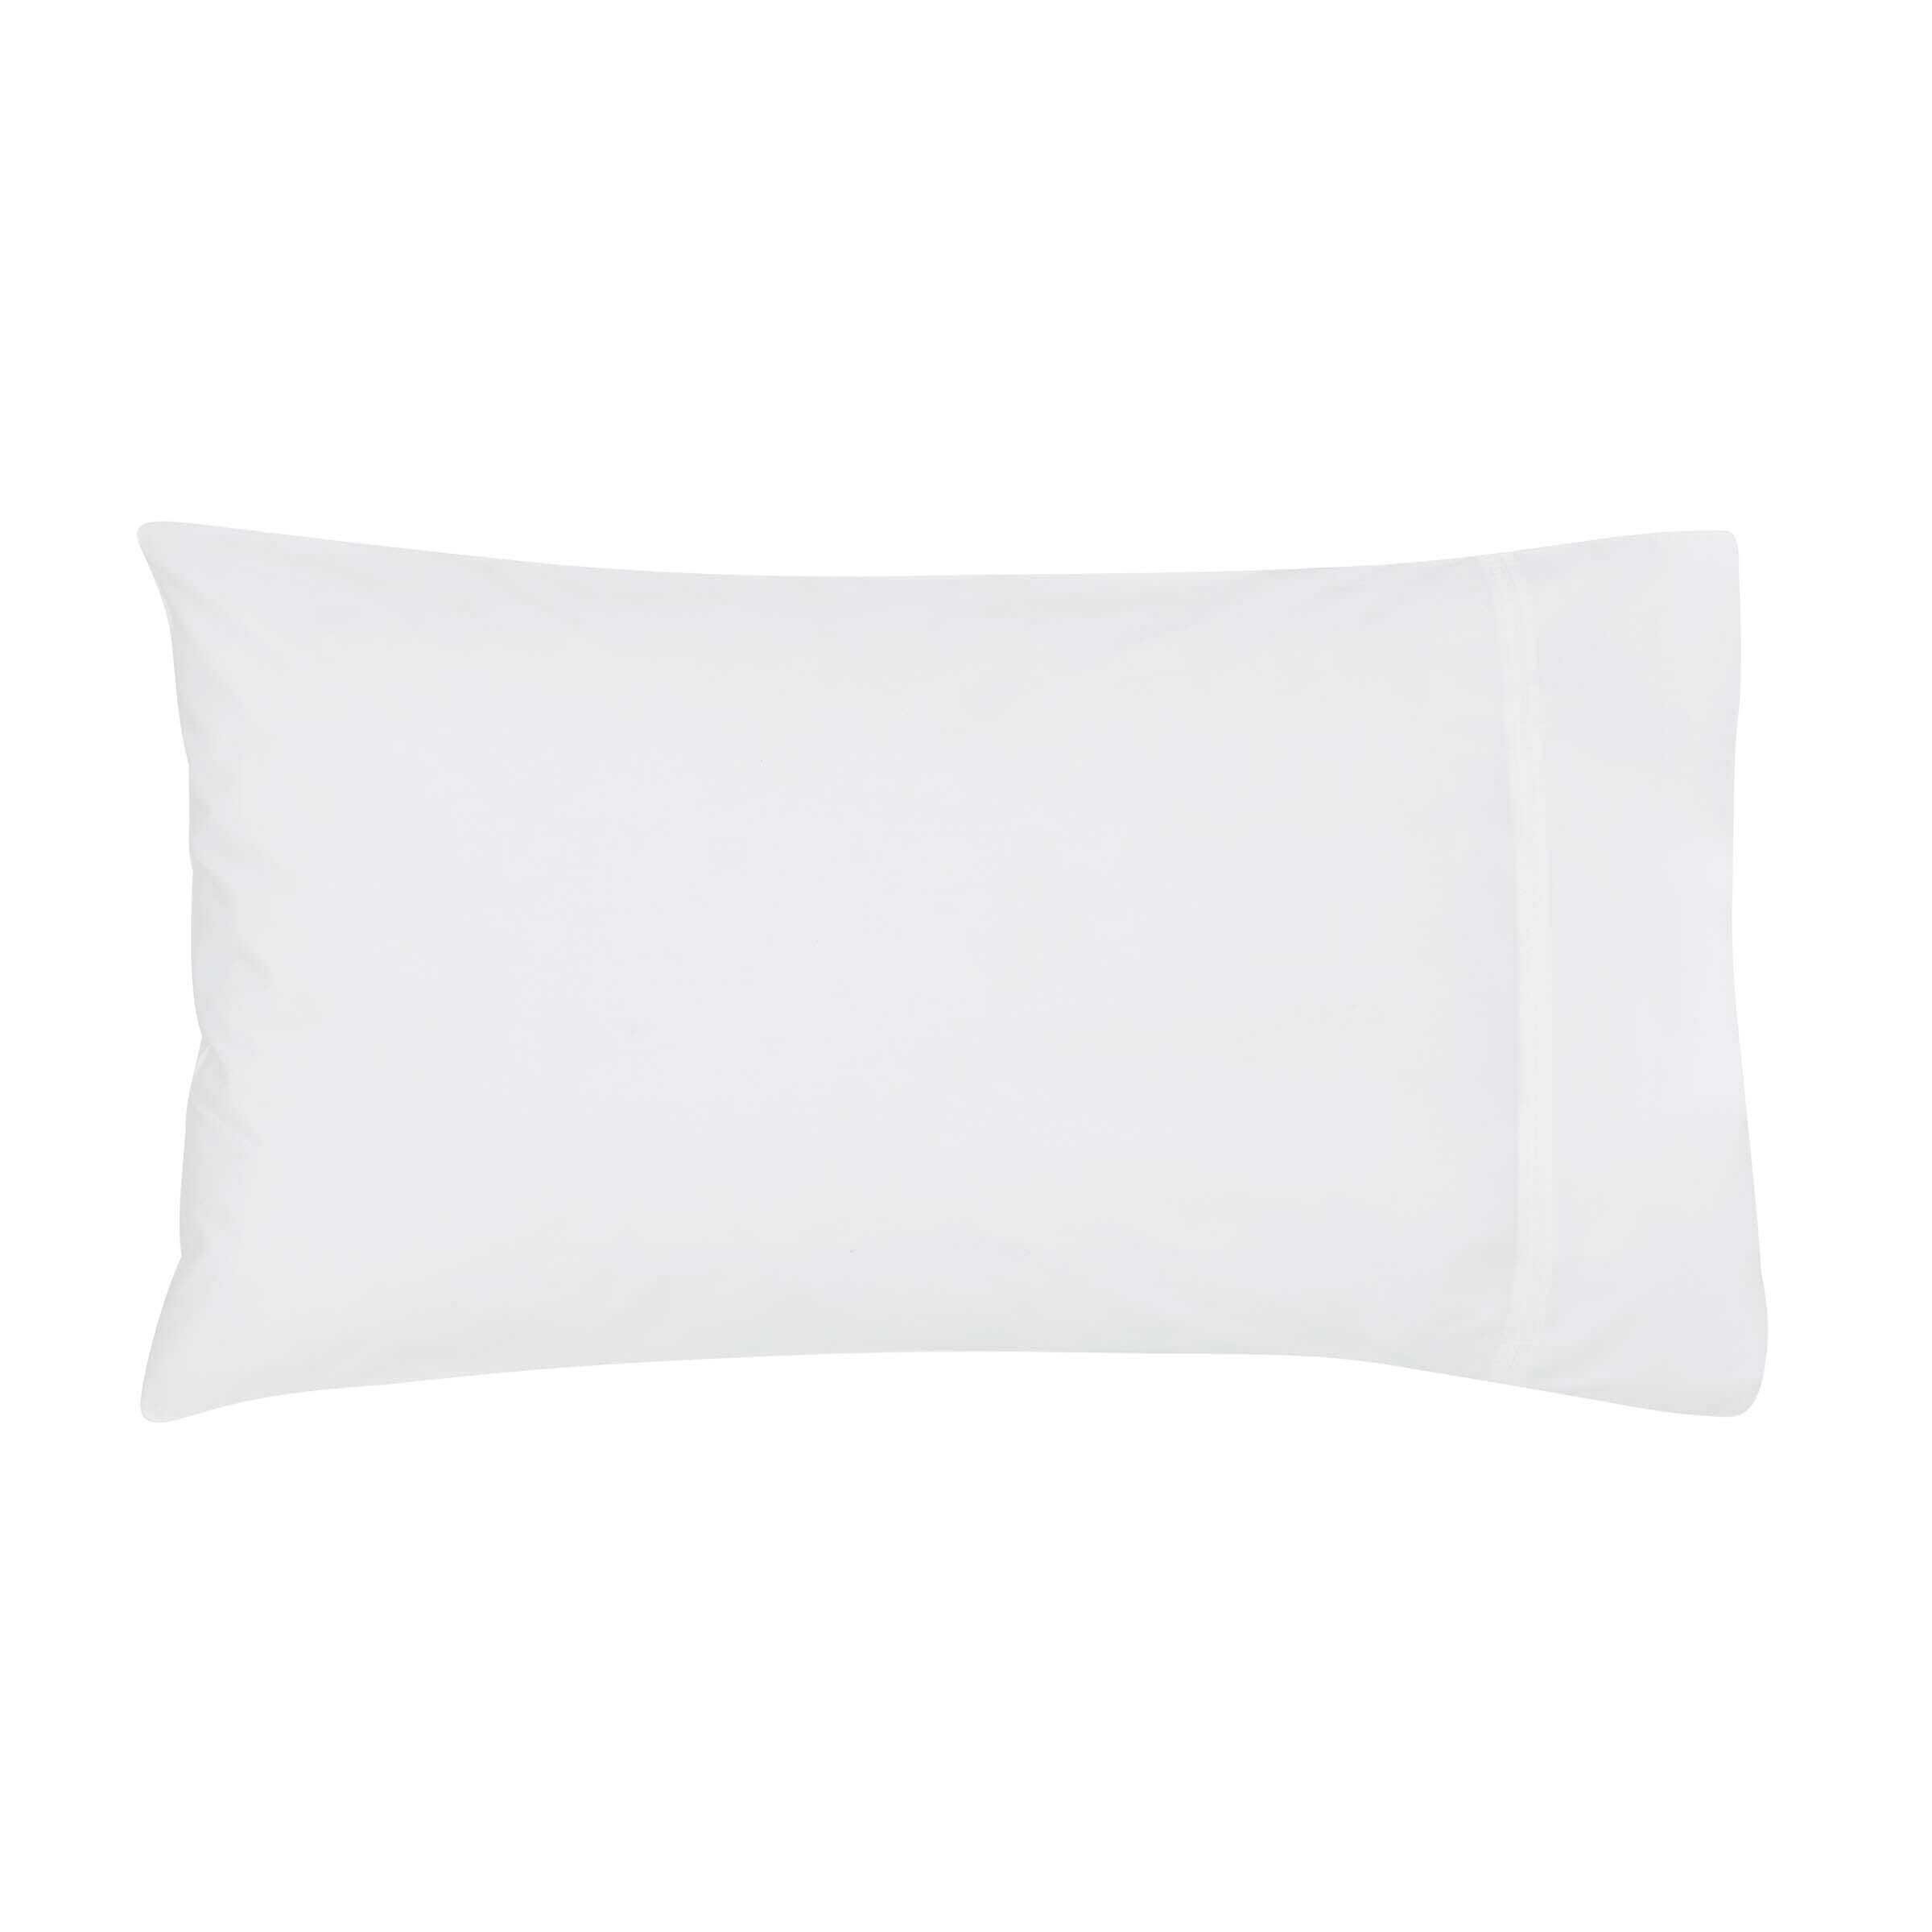 Bedeck of Belfast Fine Linens 300 Thread Count Egyptian Cotton Standard Pillowcase, White - image 1